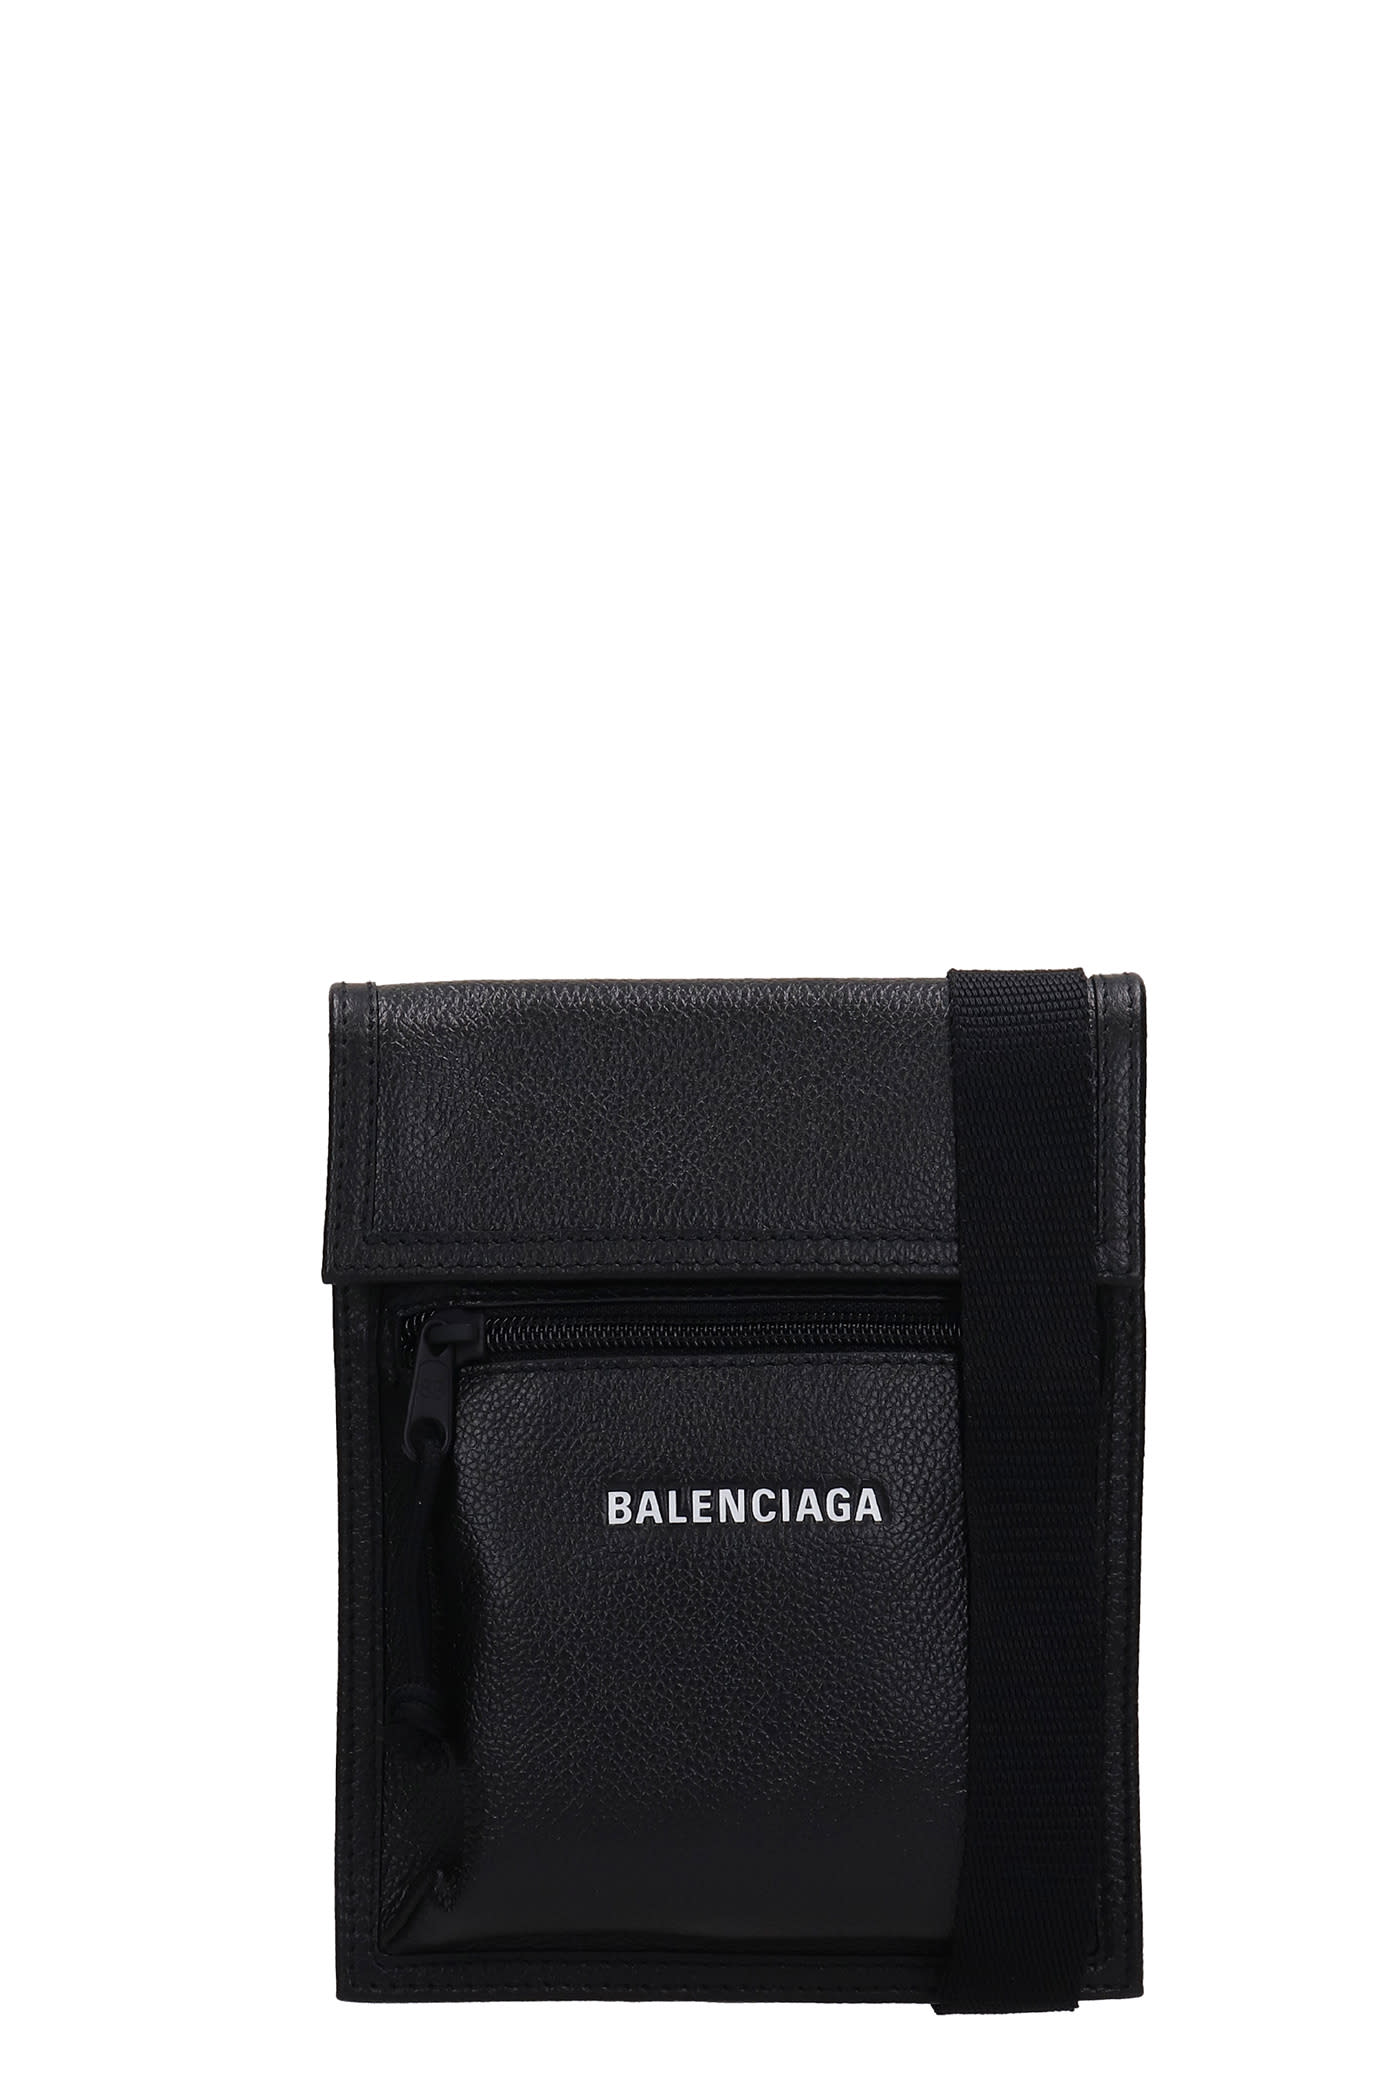 Balenciaga Waist Bag In Black Leather